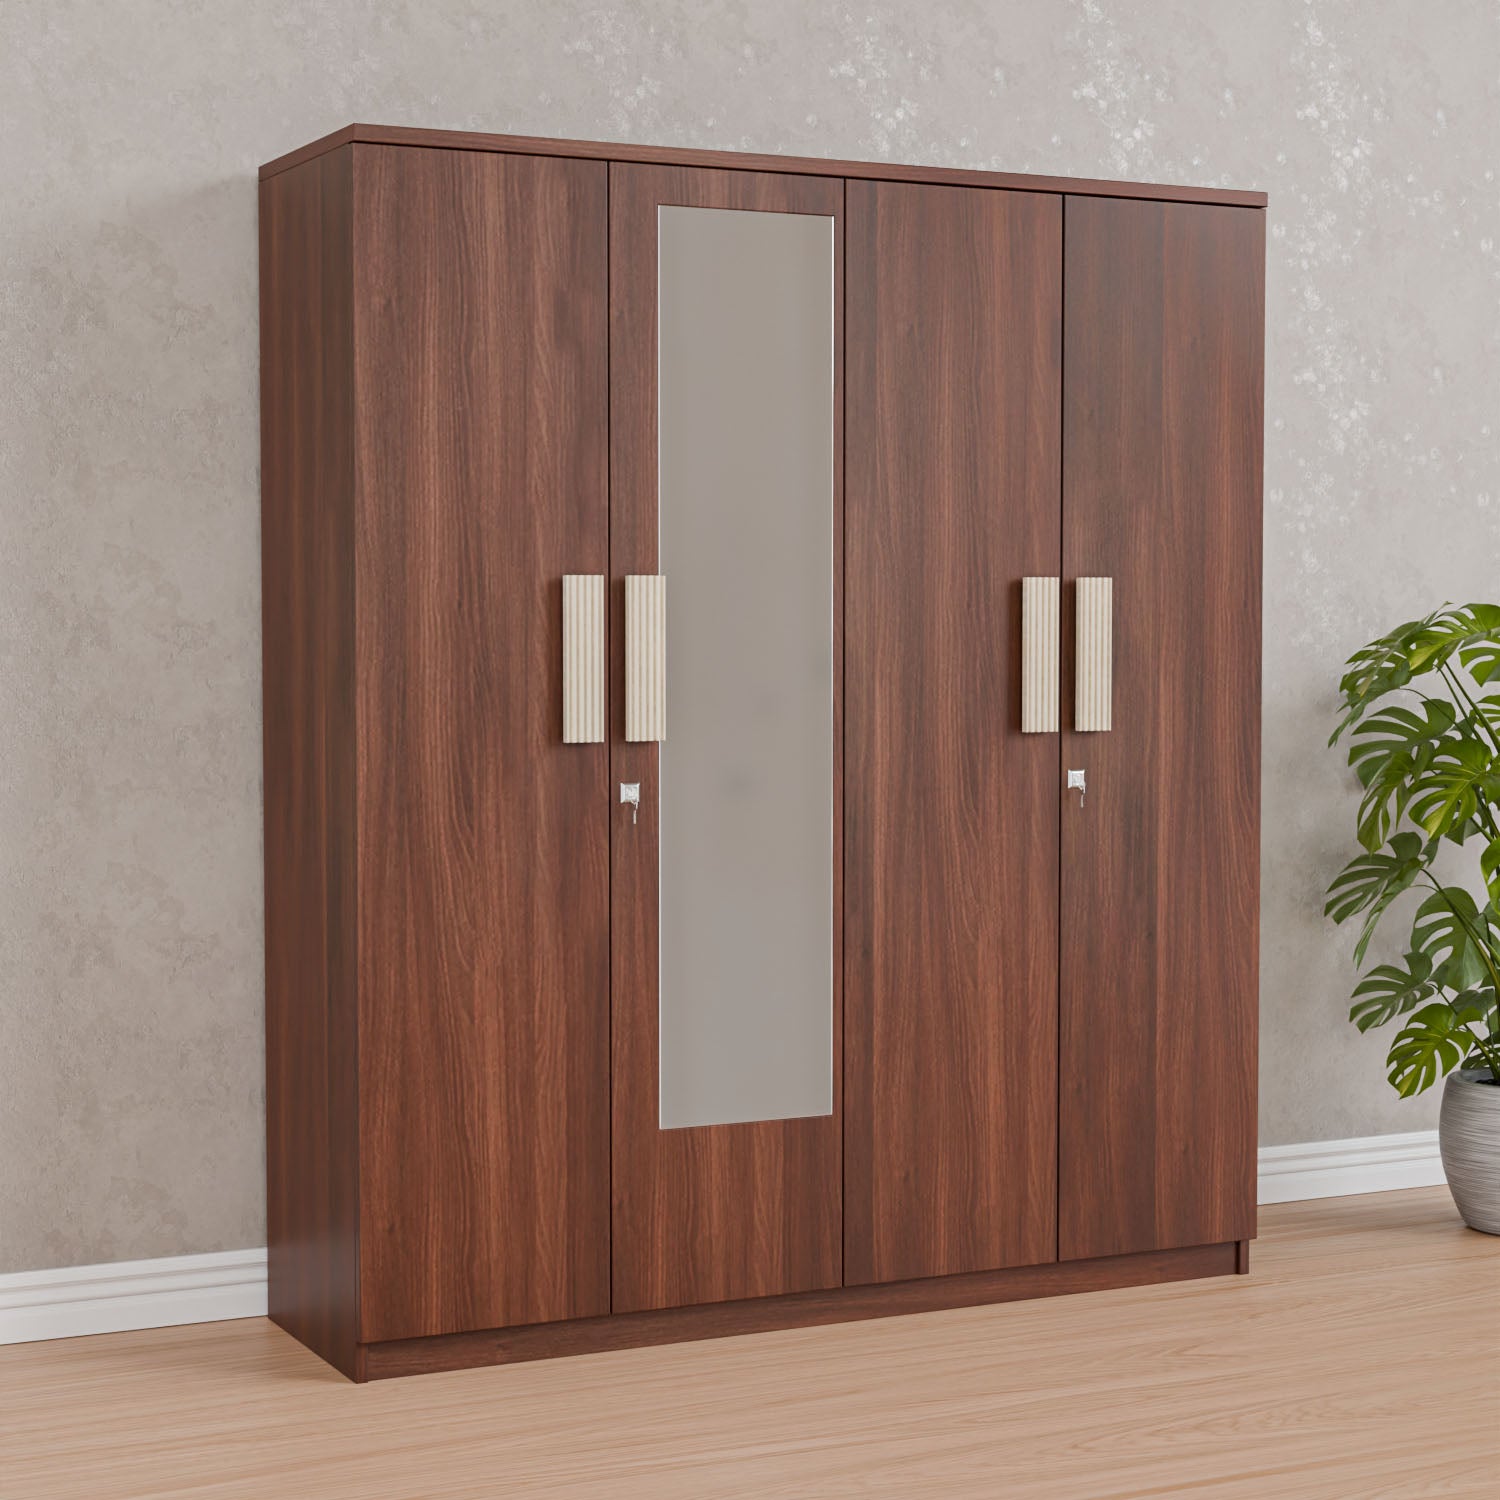 Nilkamal Rova 4 Door Wardrobe with Mirror (Walnut) - Nilkamal Furniture